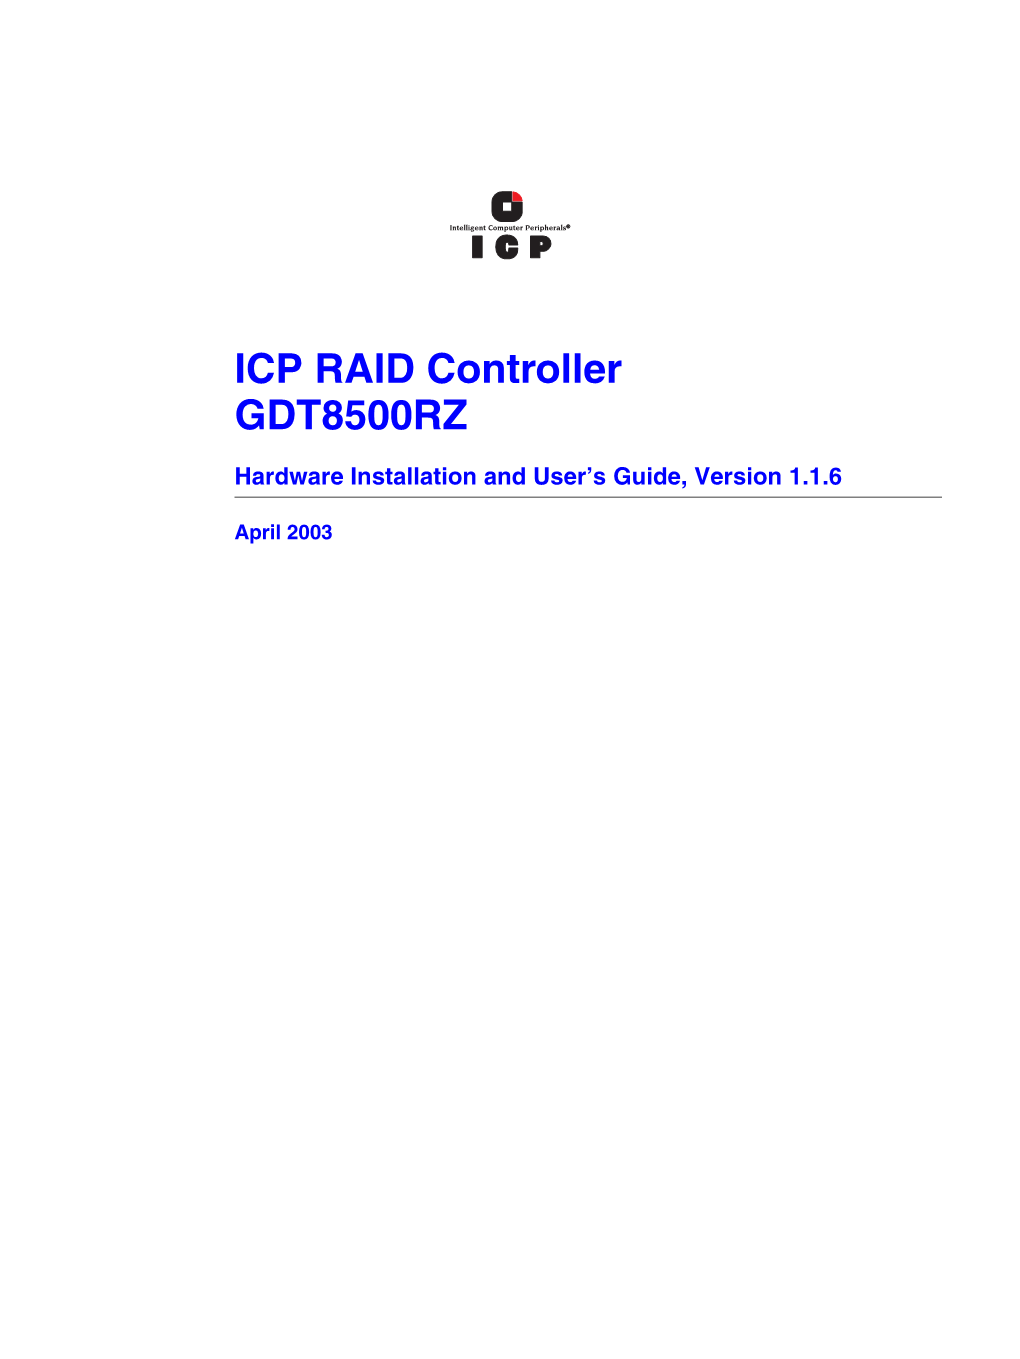 ICP RAID Controller GDT8500RZ